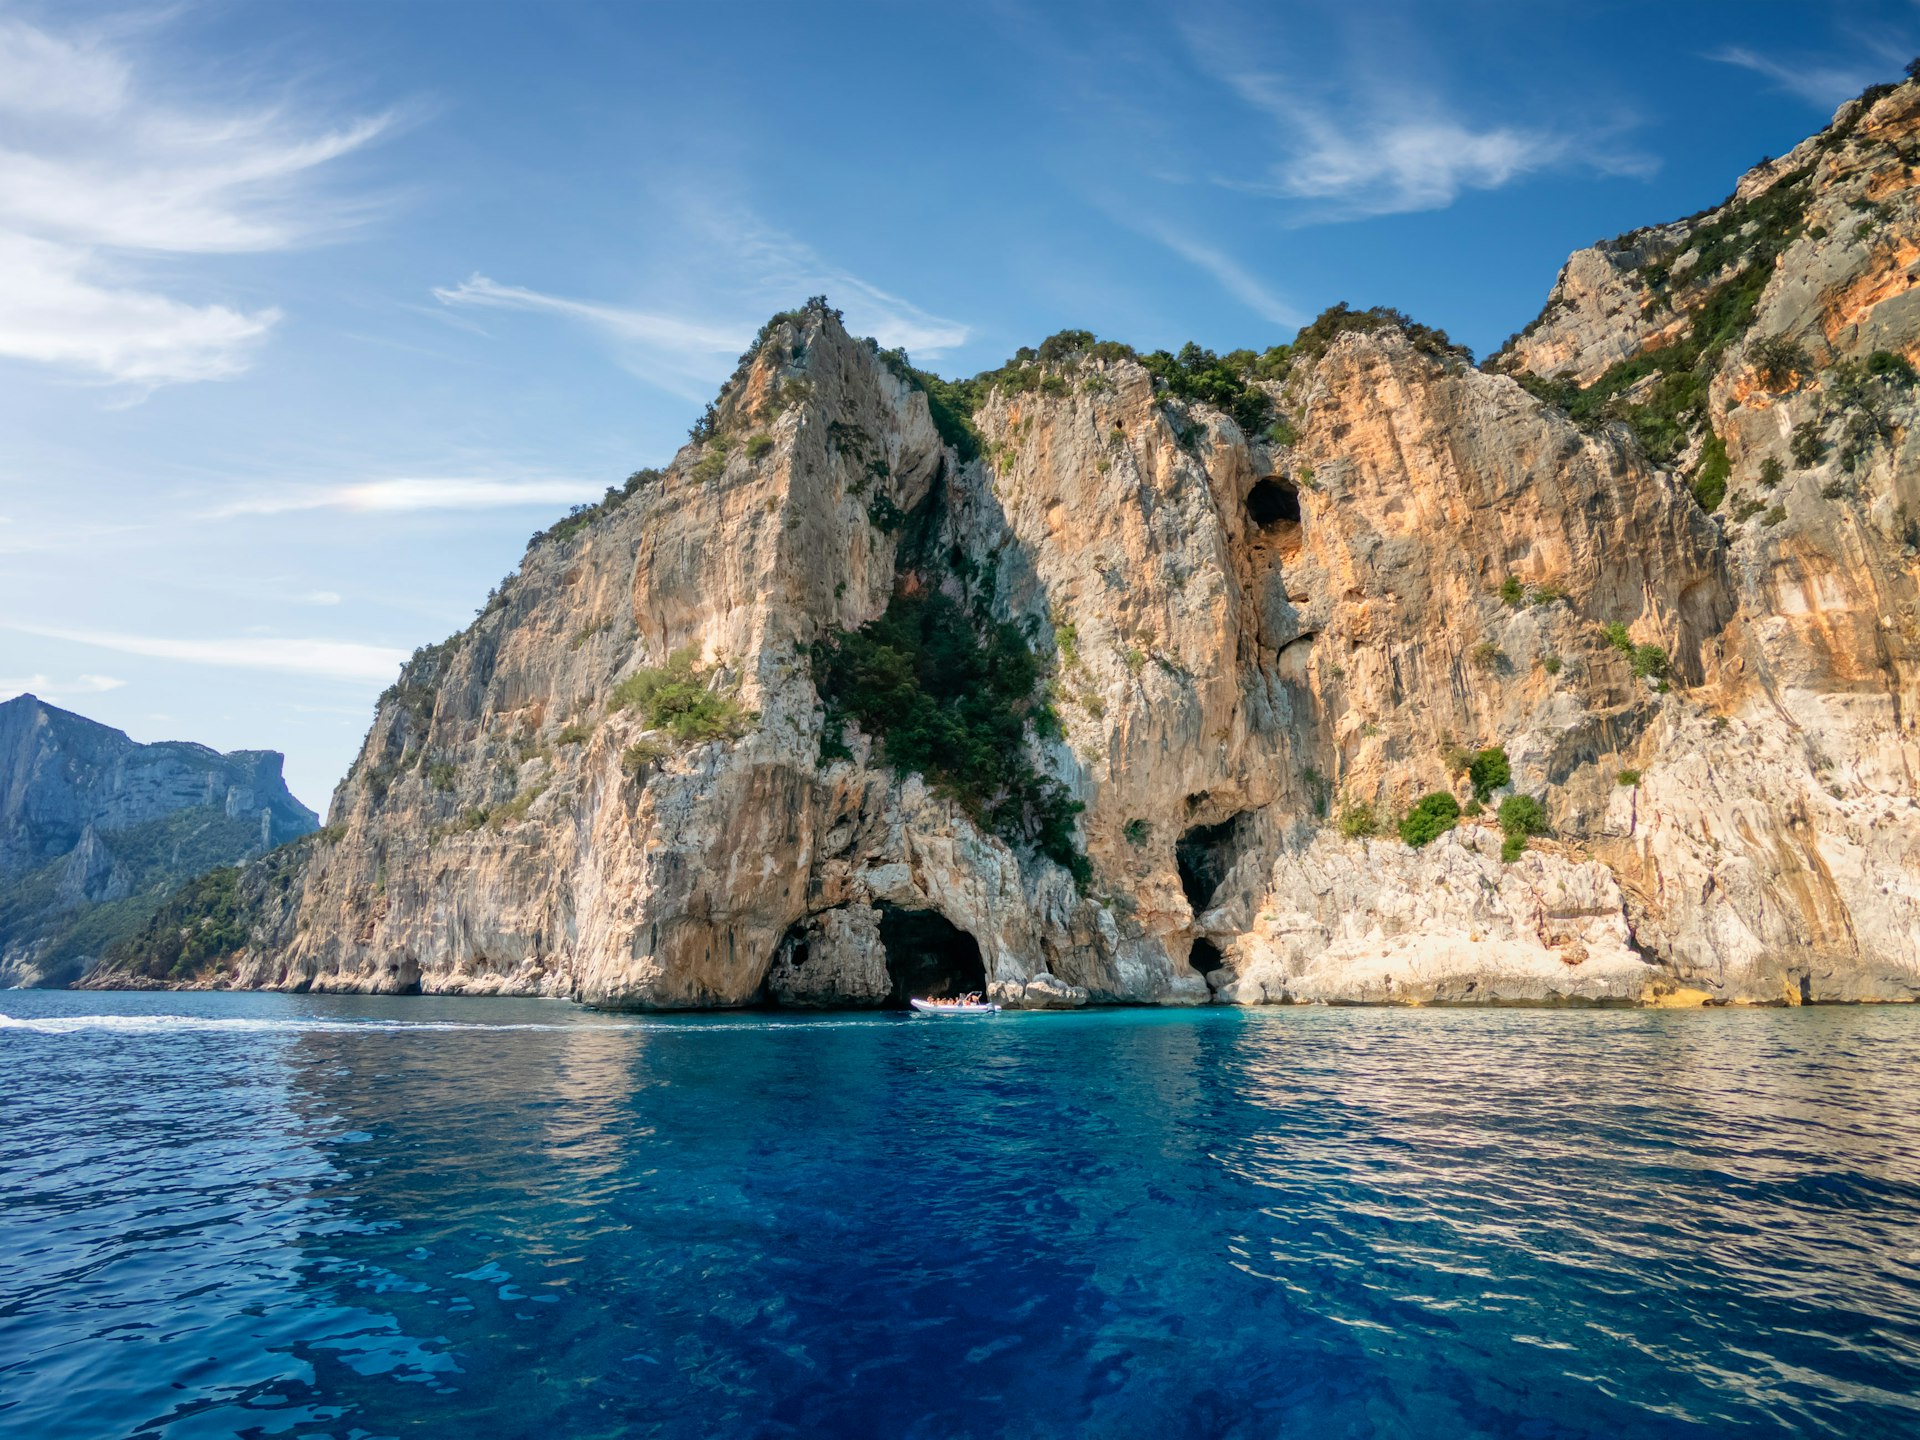 A rocky limestone cliff rises above a clear blue sea. 